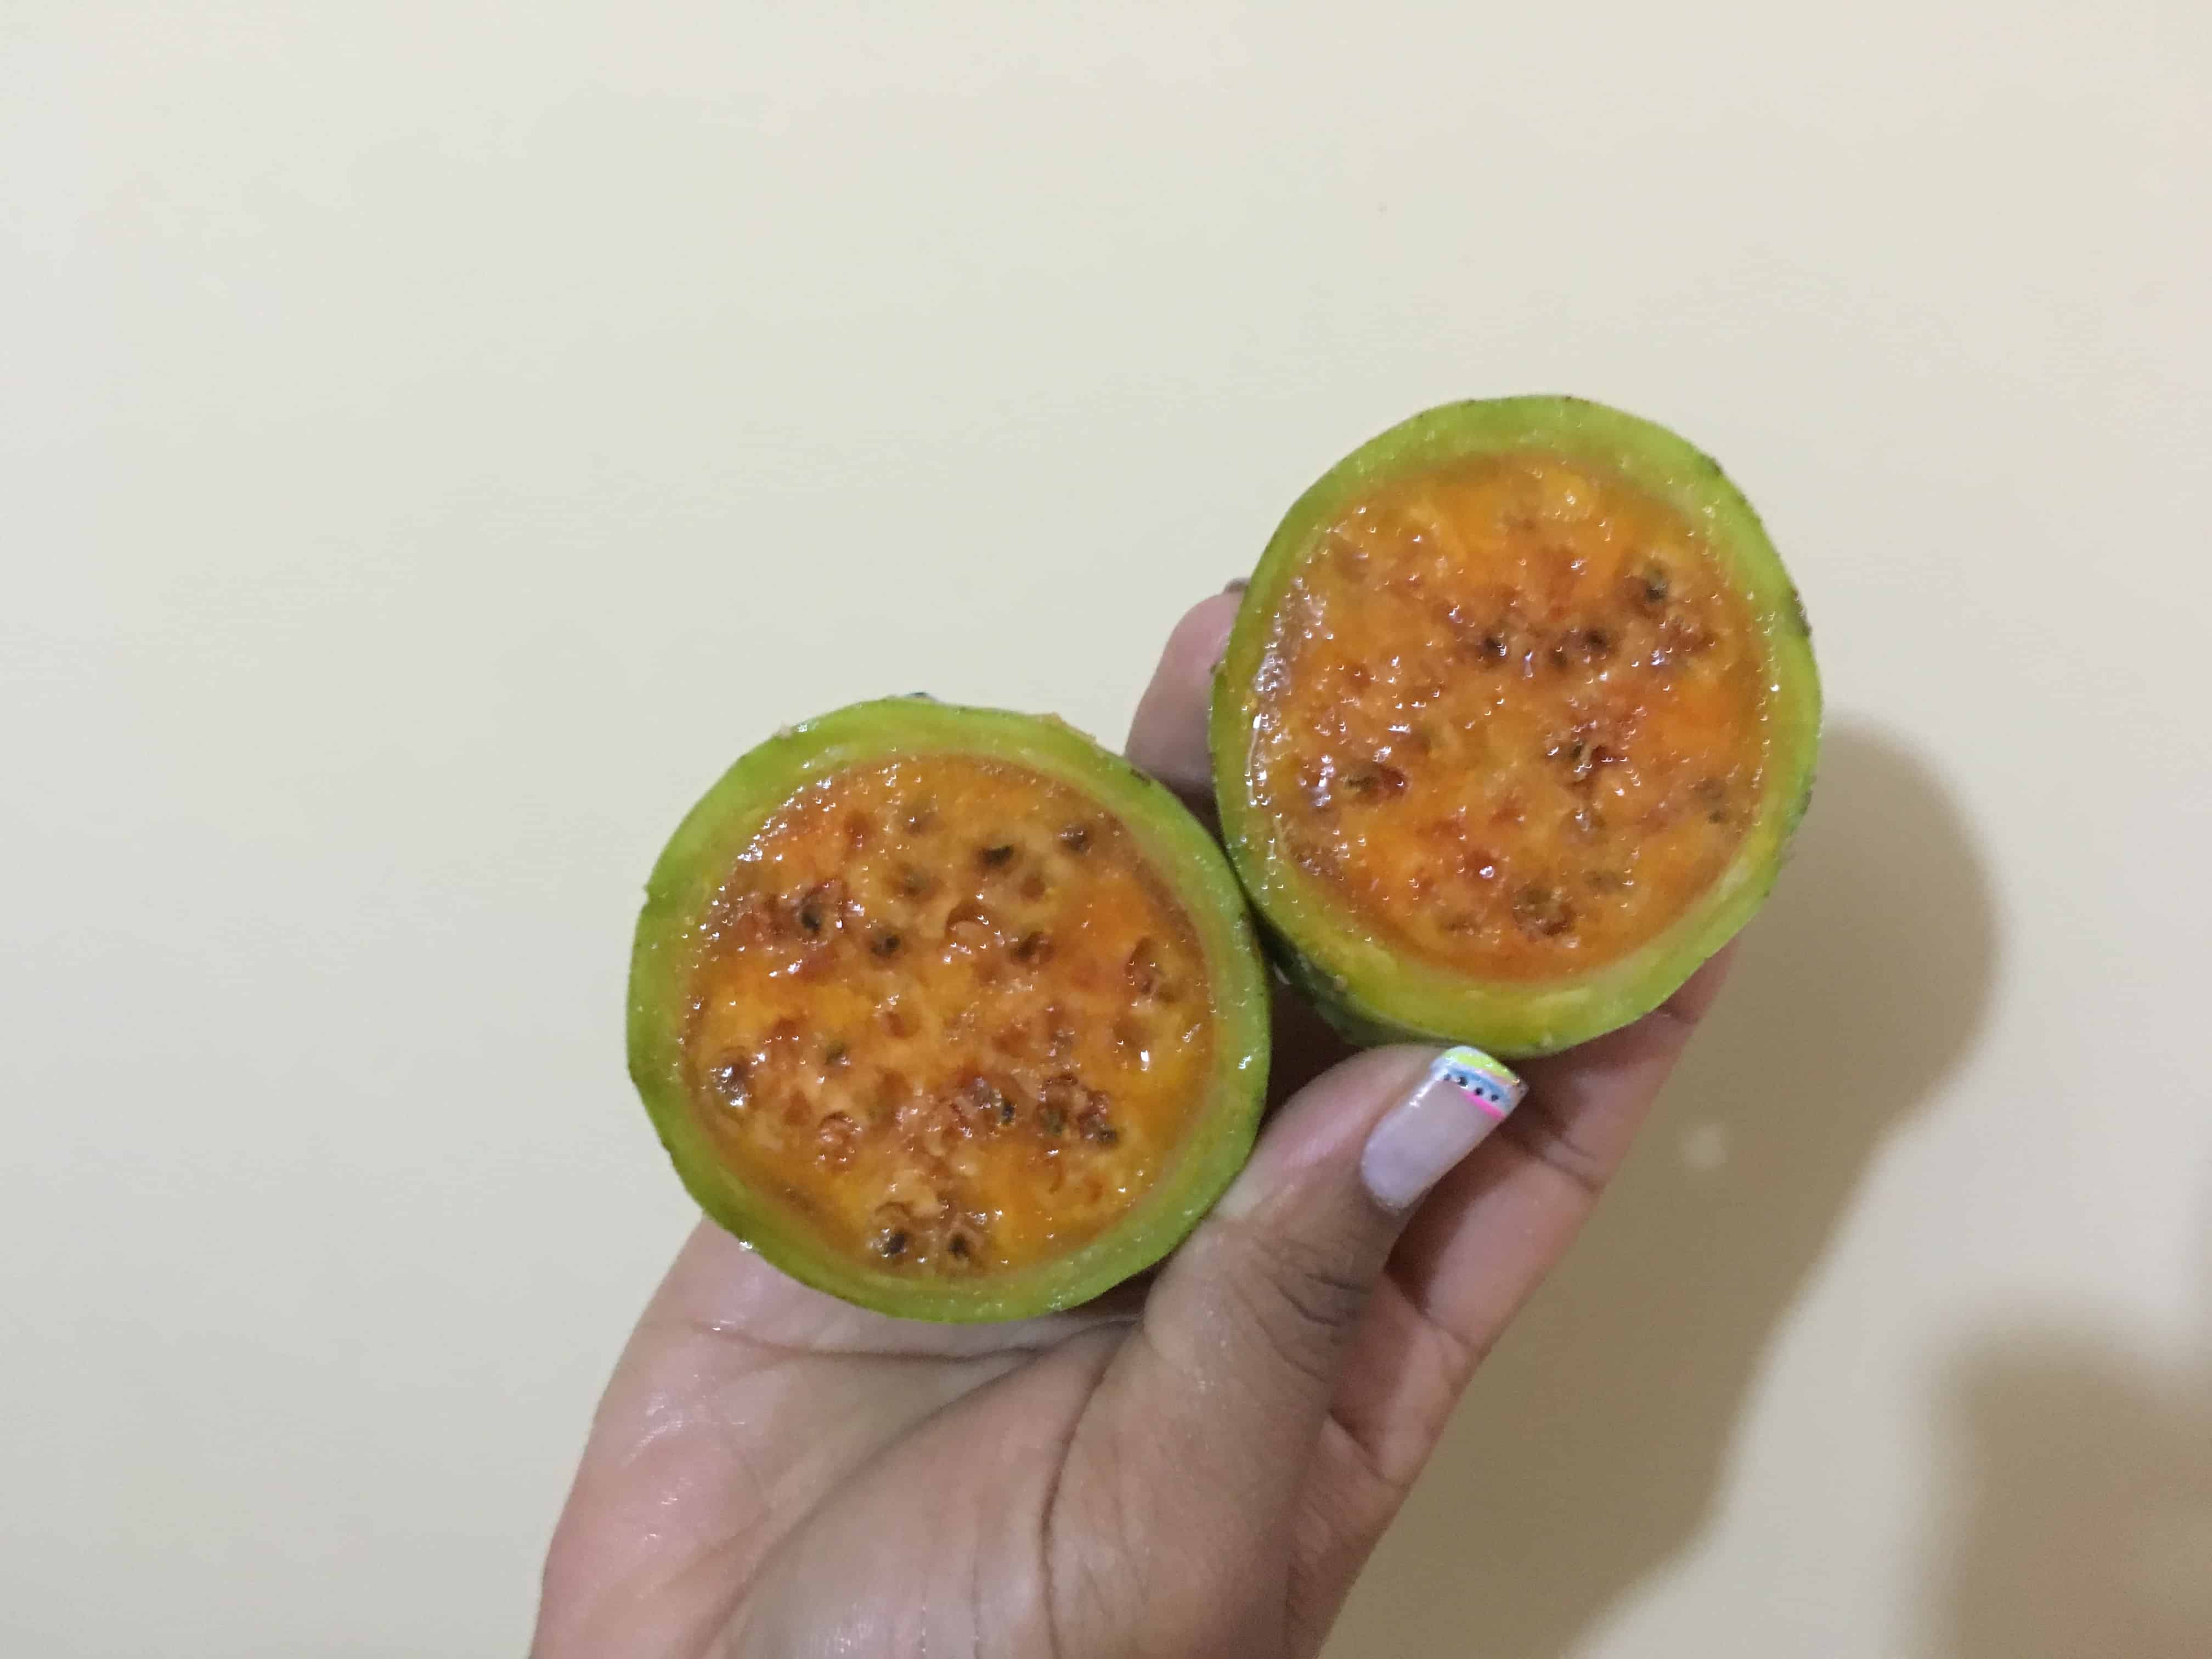 Higo Fruit in Colombia